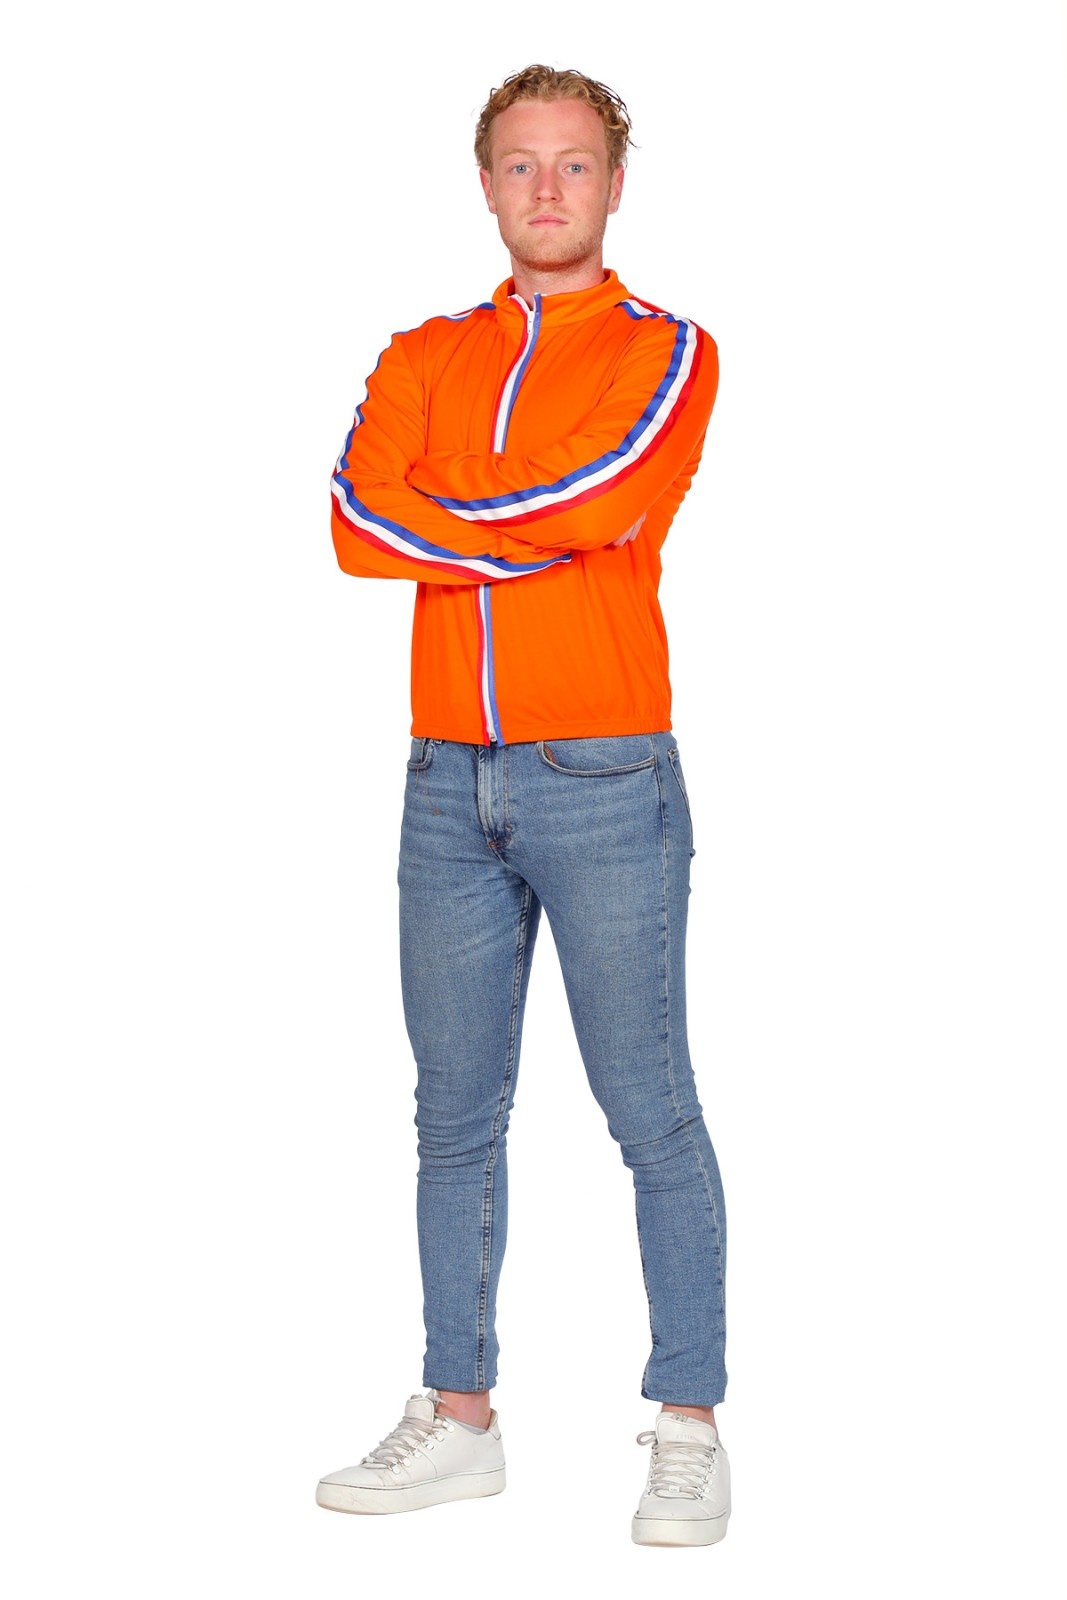 Wilbers - 100% NL & Oranje Kostuum - Sportief Oranje Trainingsjack Holland Man - oranje - Large - Carnavalskleding - Verkleedkleding